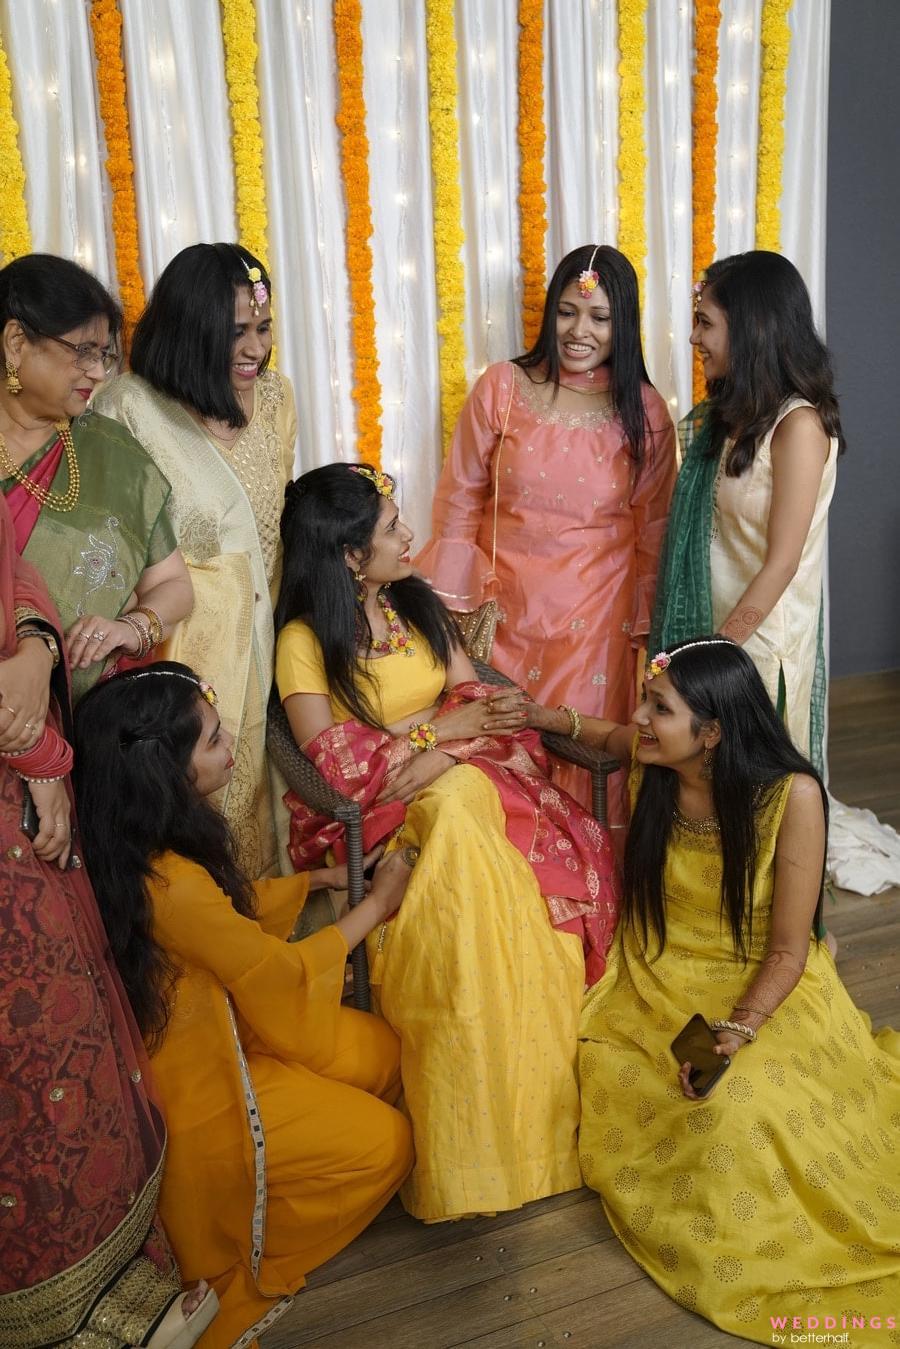 Urvashi & Manav's Wedding Pictures Are So Surreal! - ShaadiWish